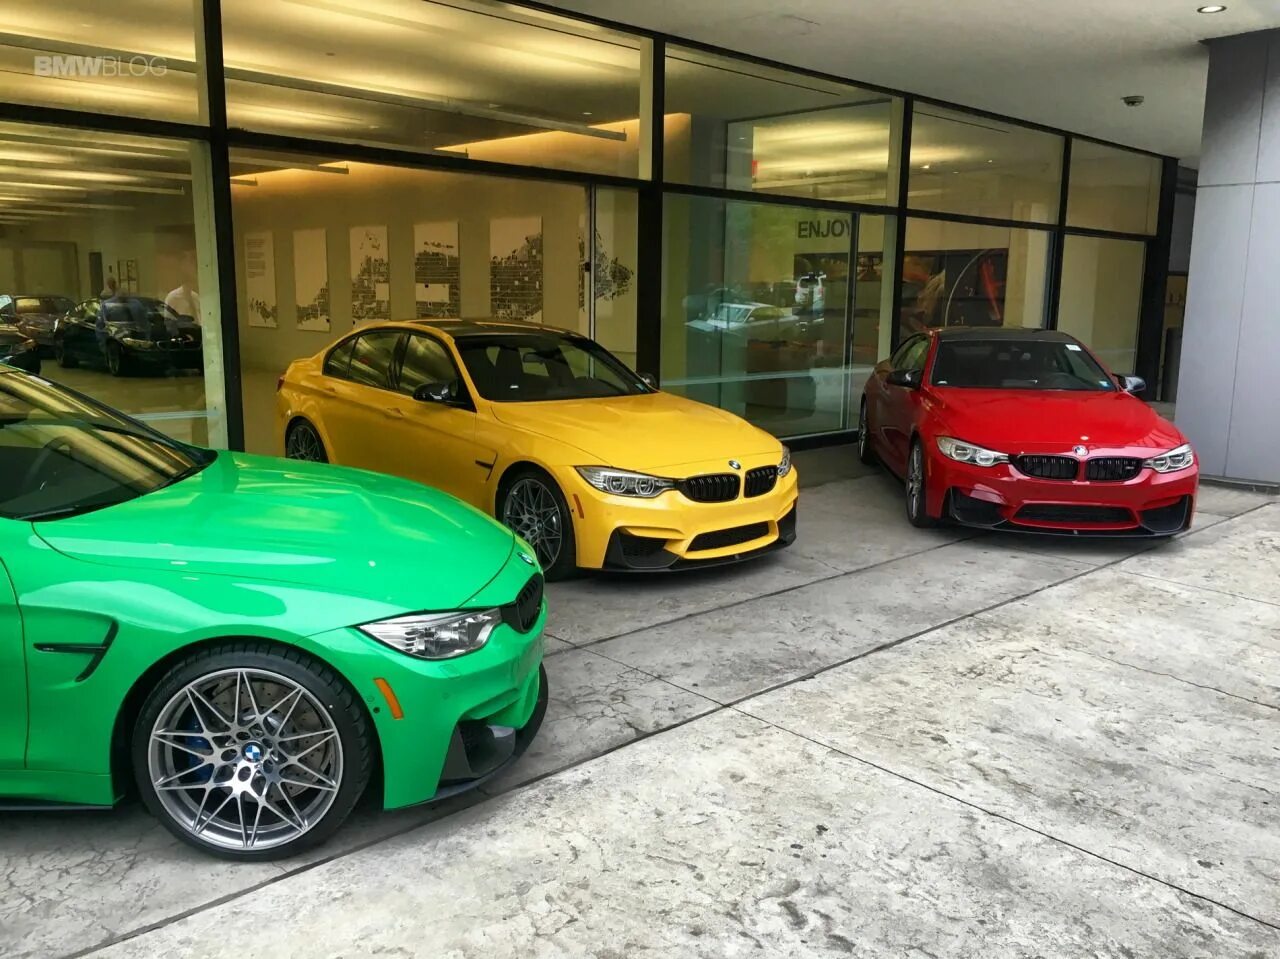 BMW m4 хамелеон. BMW m4 Colors. BMW m4 зеленая. BMW m4 individual. Изменения цвета машины